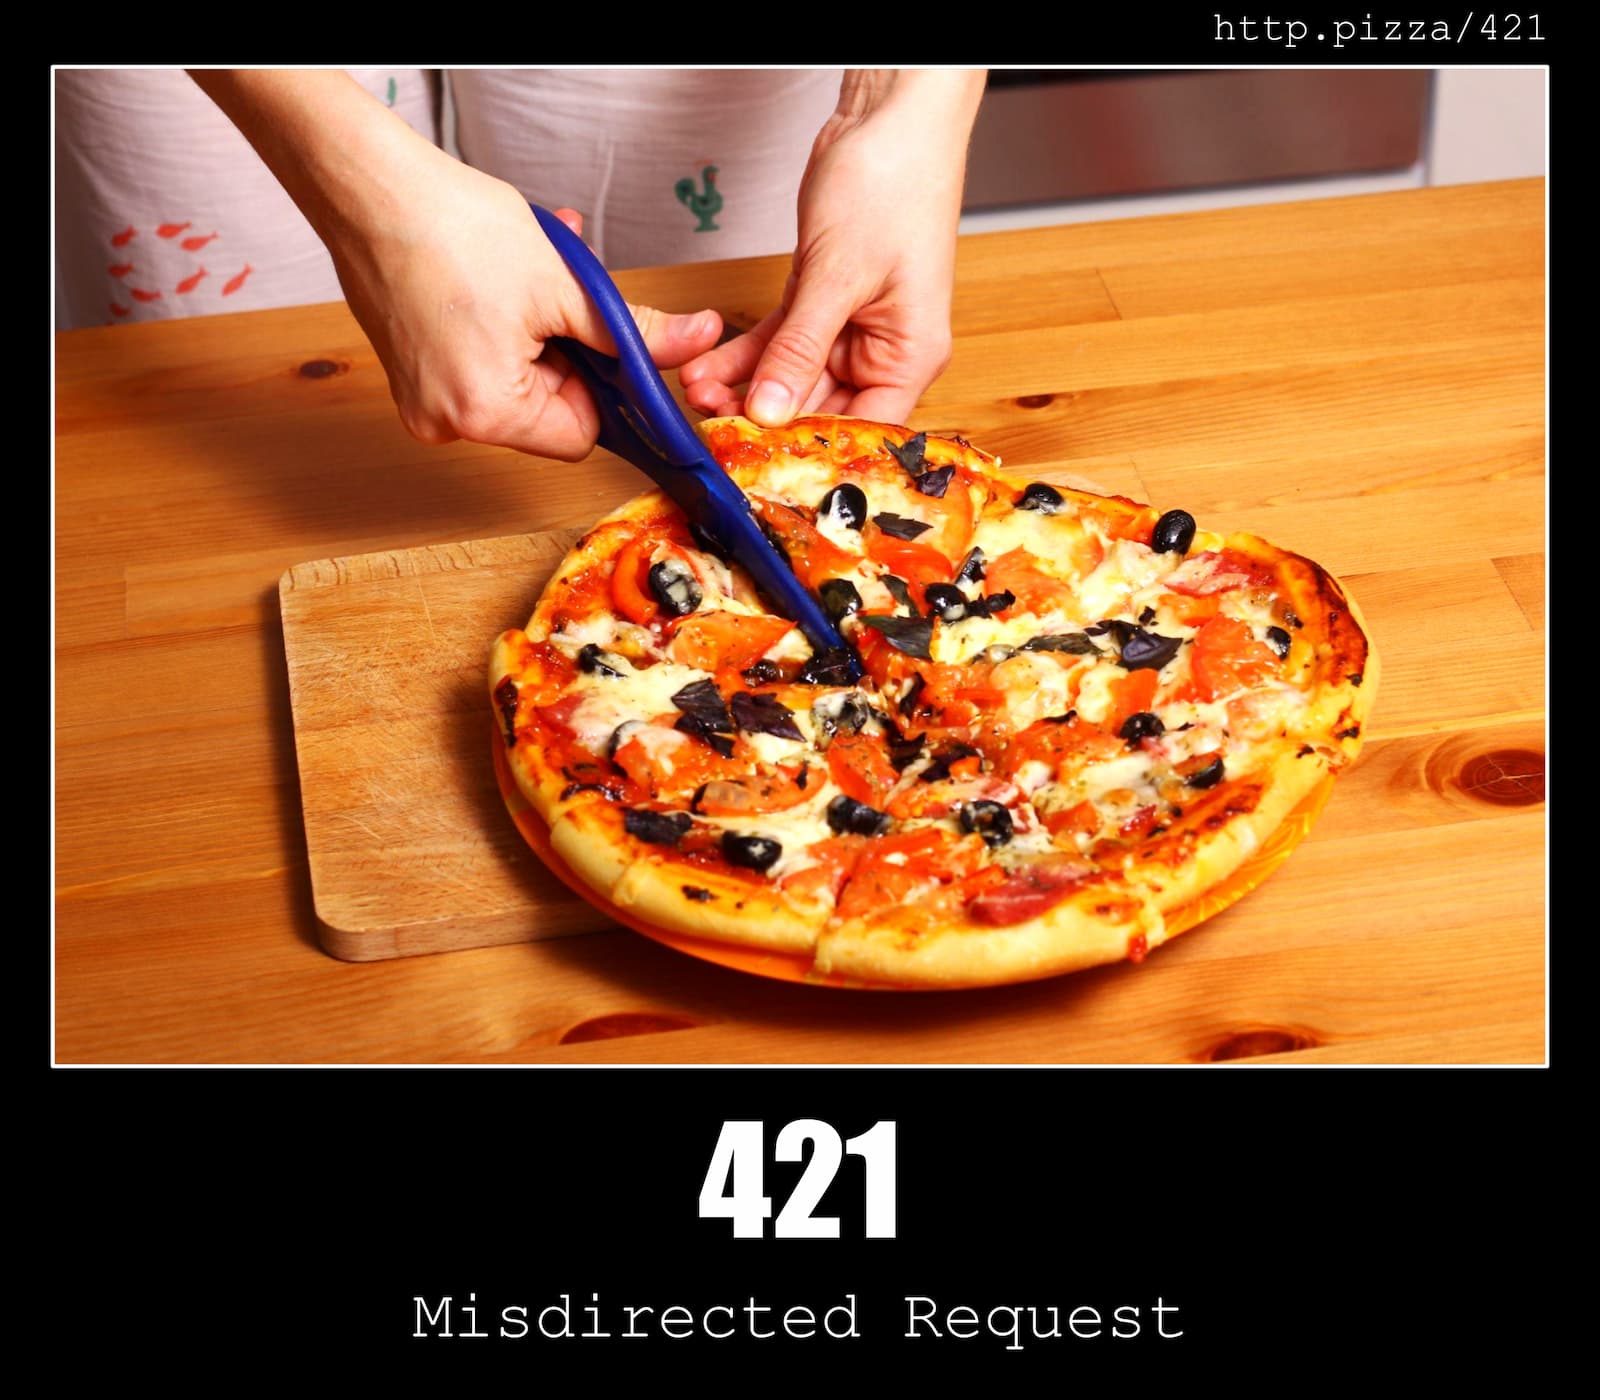 HTTP Status Code 421 Misdirected Request & Pizzas